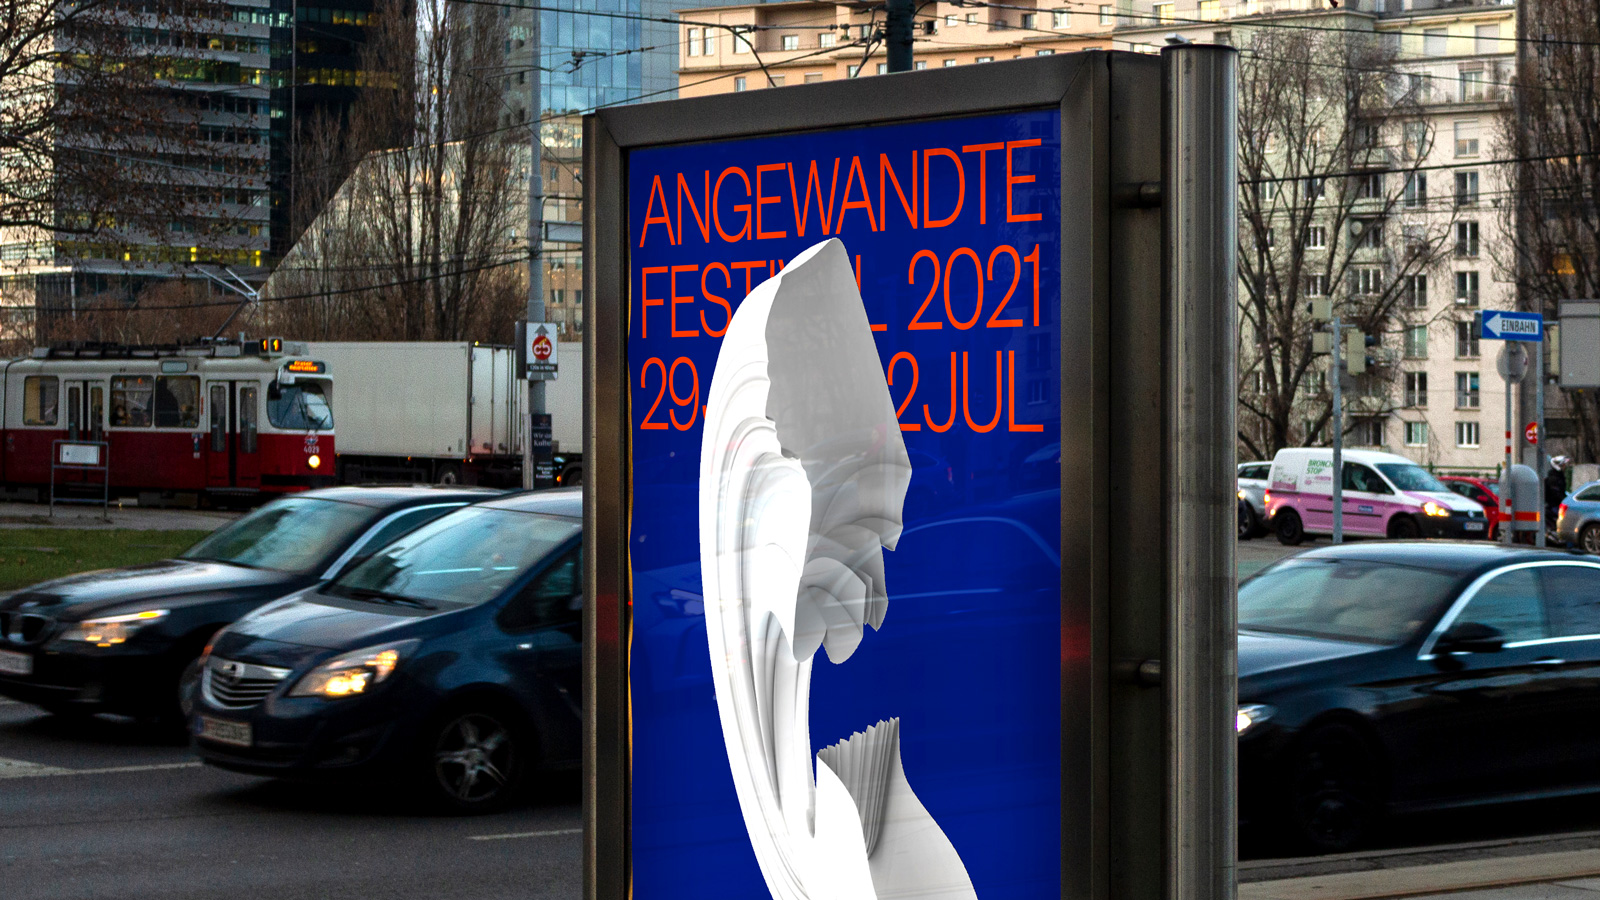 Angewandte Festival 2021